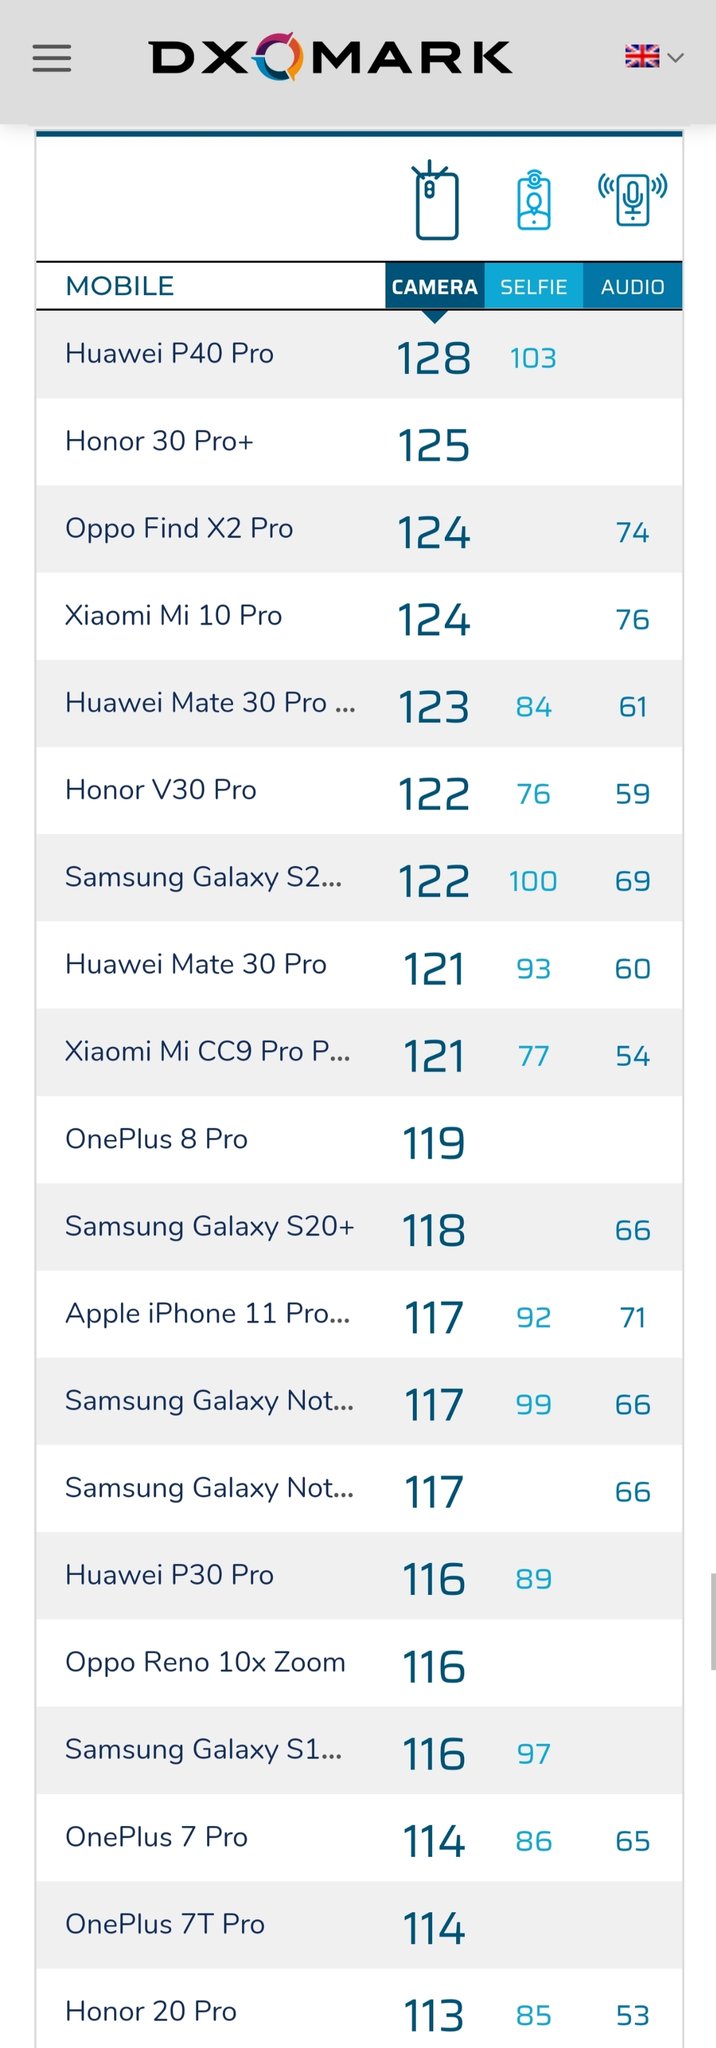 uren mad mynte Johnny Zhang on Twitter: "Latest top 20 mobiles on DXO Mark including 2  devices from OPPO https://t.co/BV3Qet8uHn" / Twitter